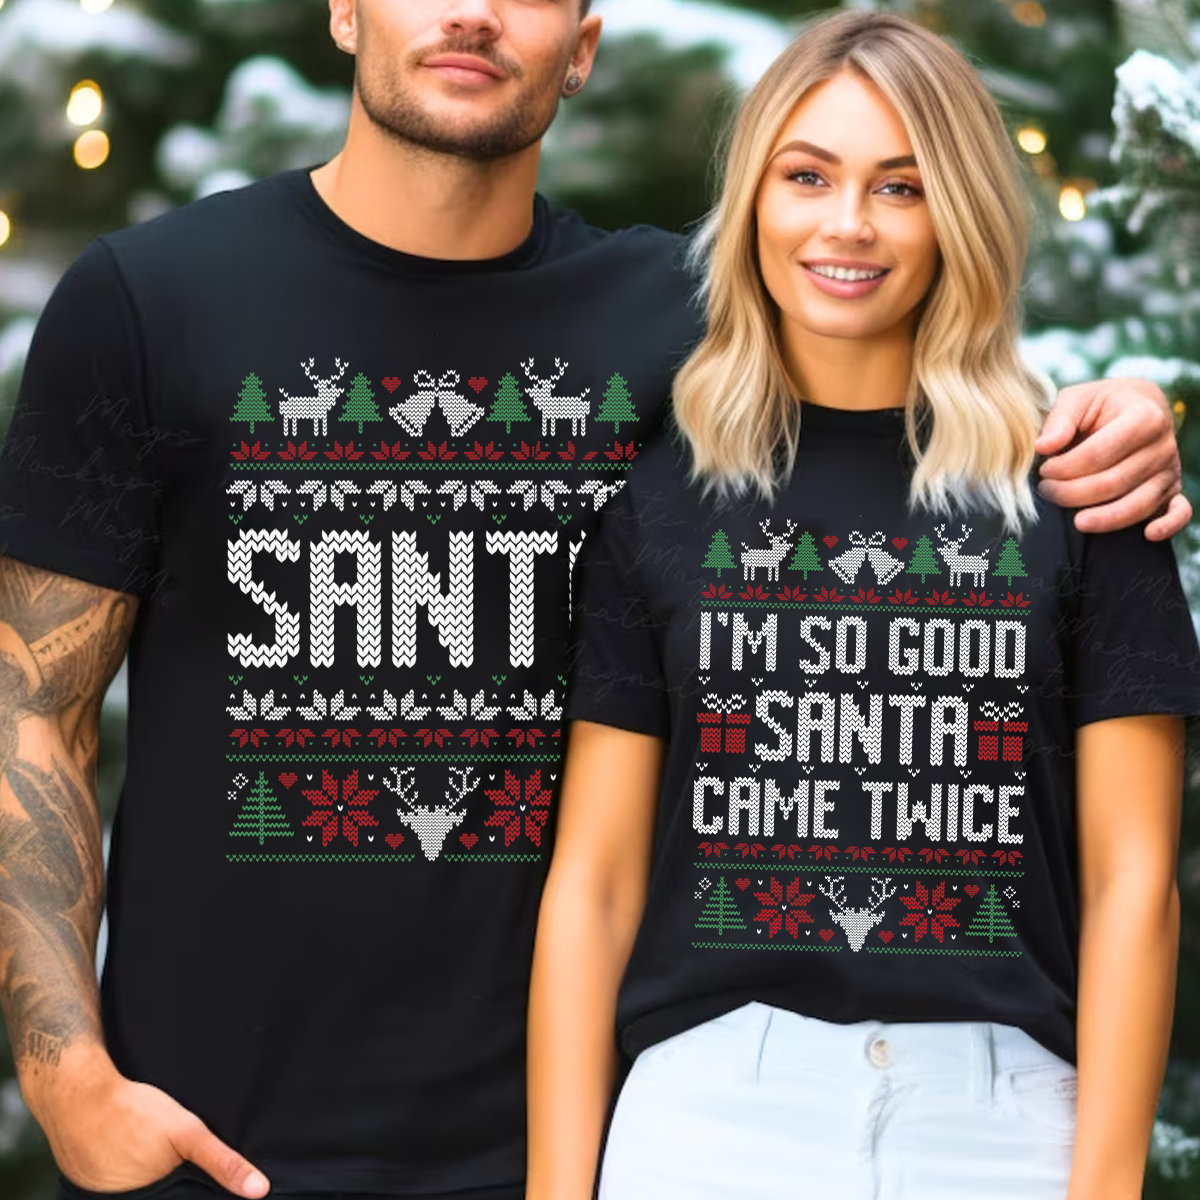 I'm So Good Santa Came Twice Couples Christmas T-Shirt